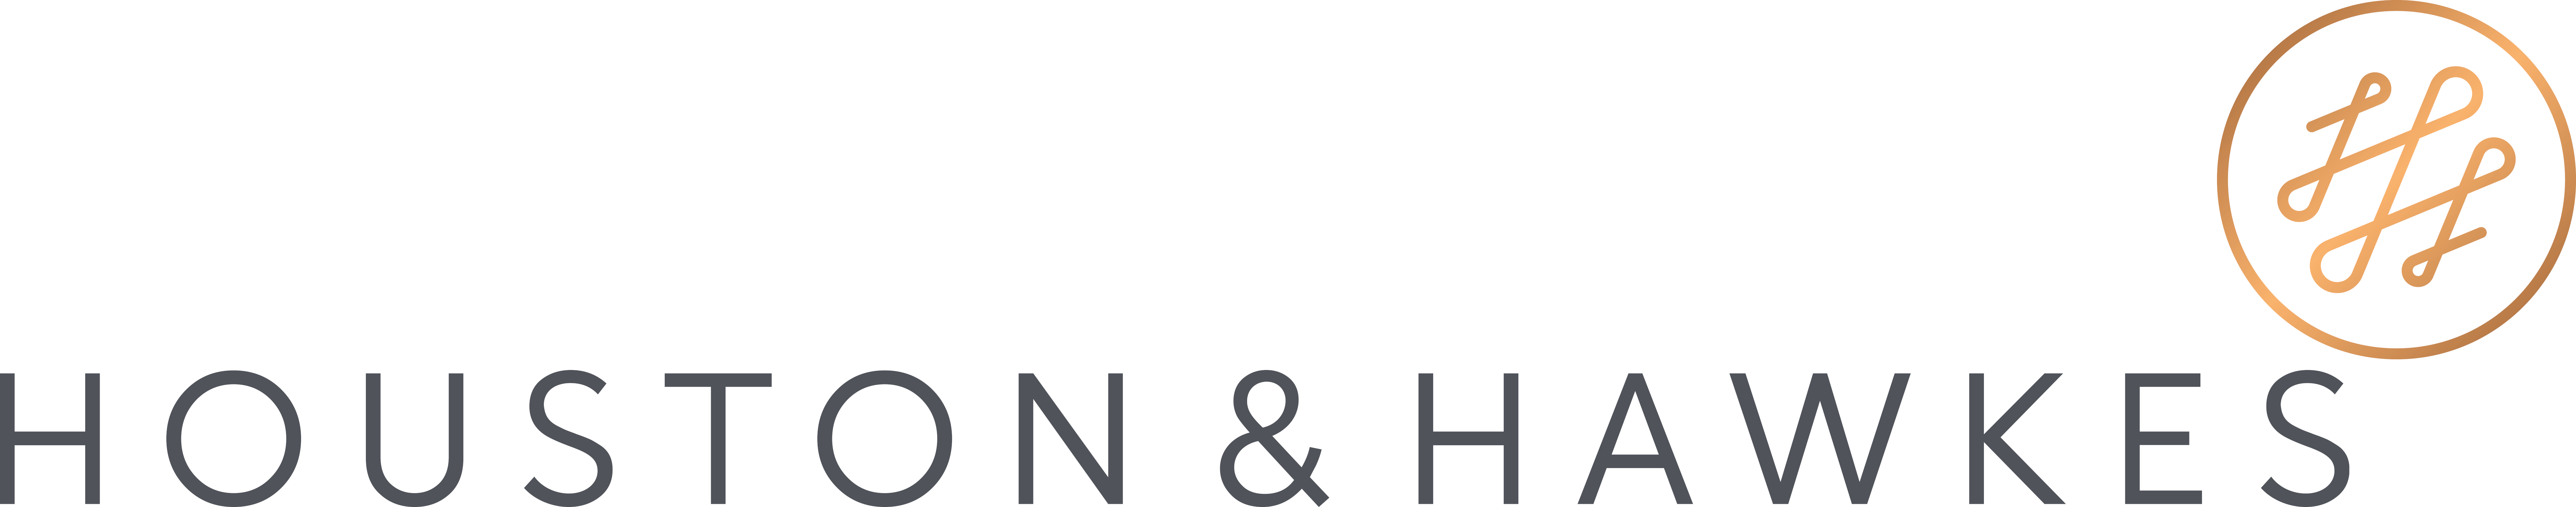 logo for Houston & Hawkes